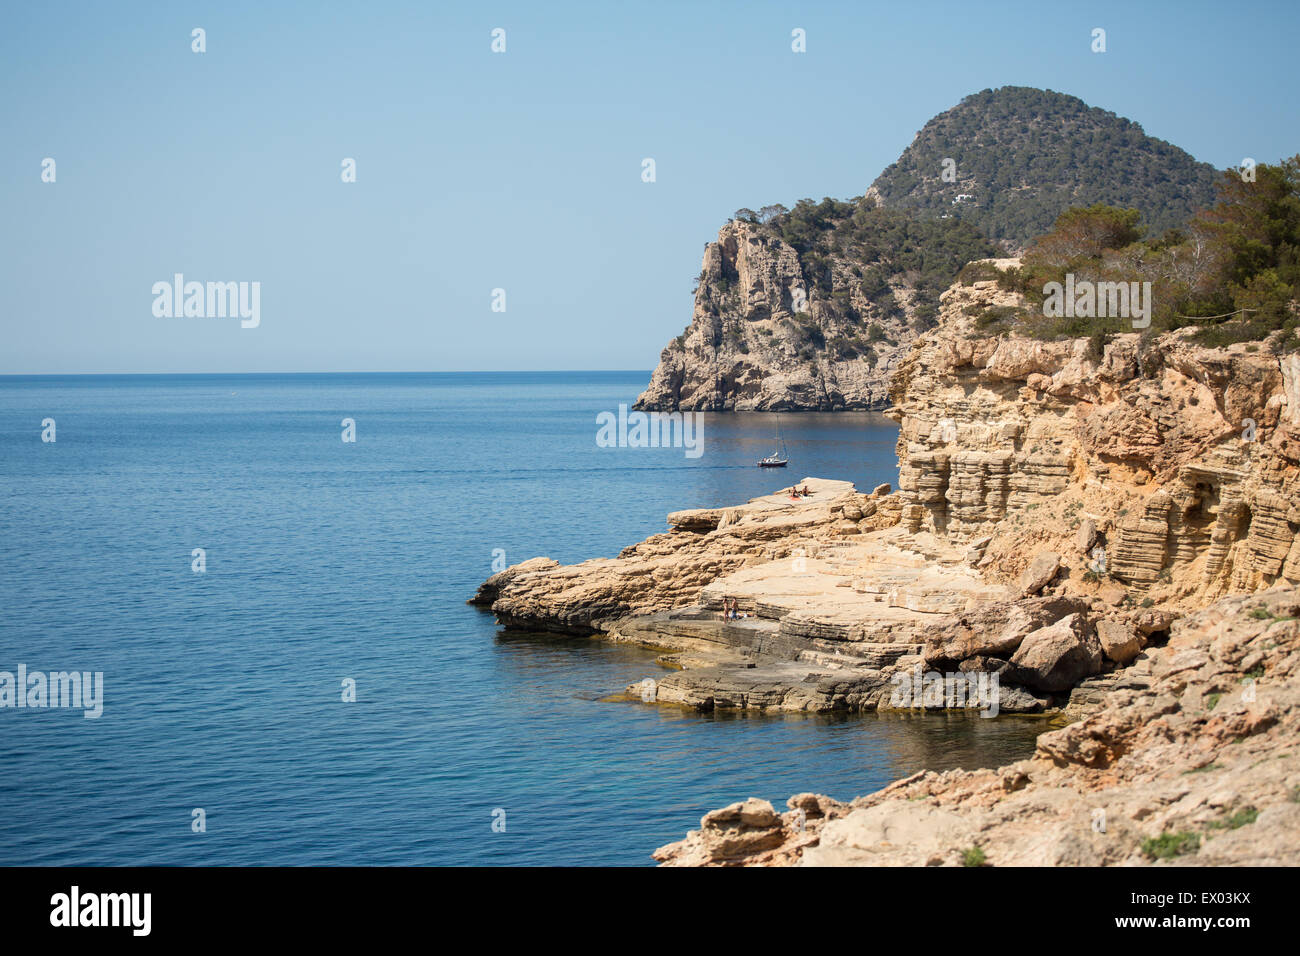 View of cliffs and rocky coastline, Ibiza, Spain Stock Photo